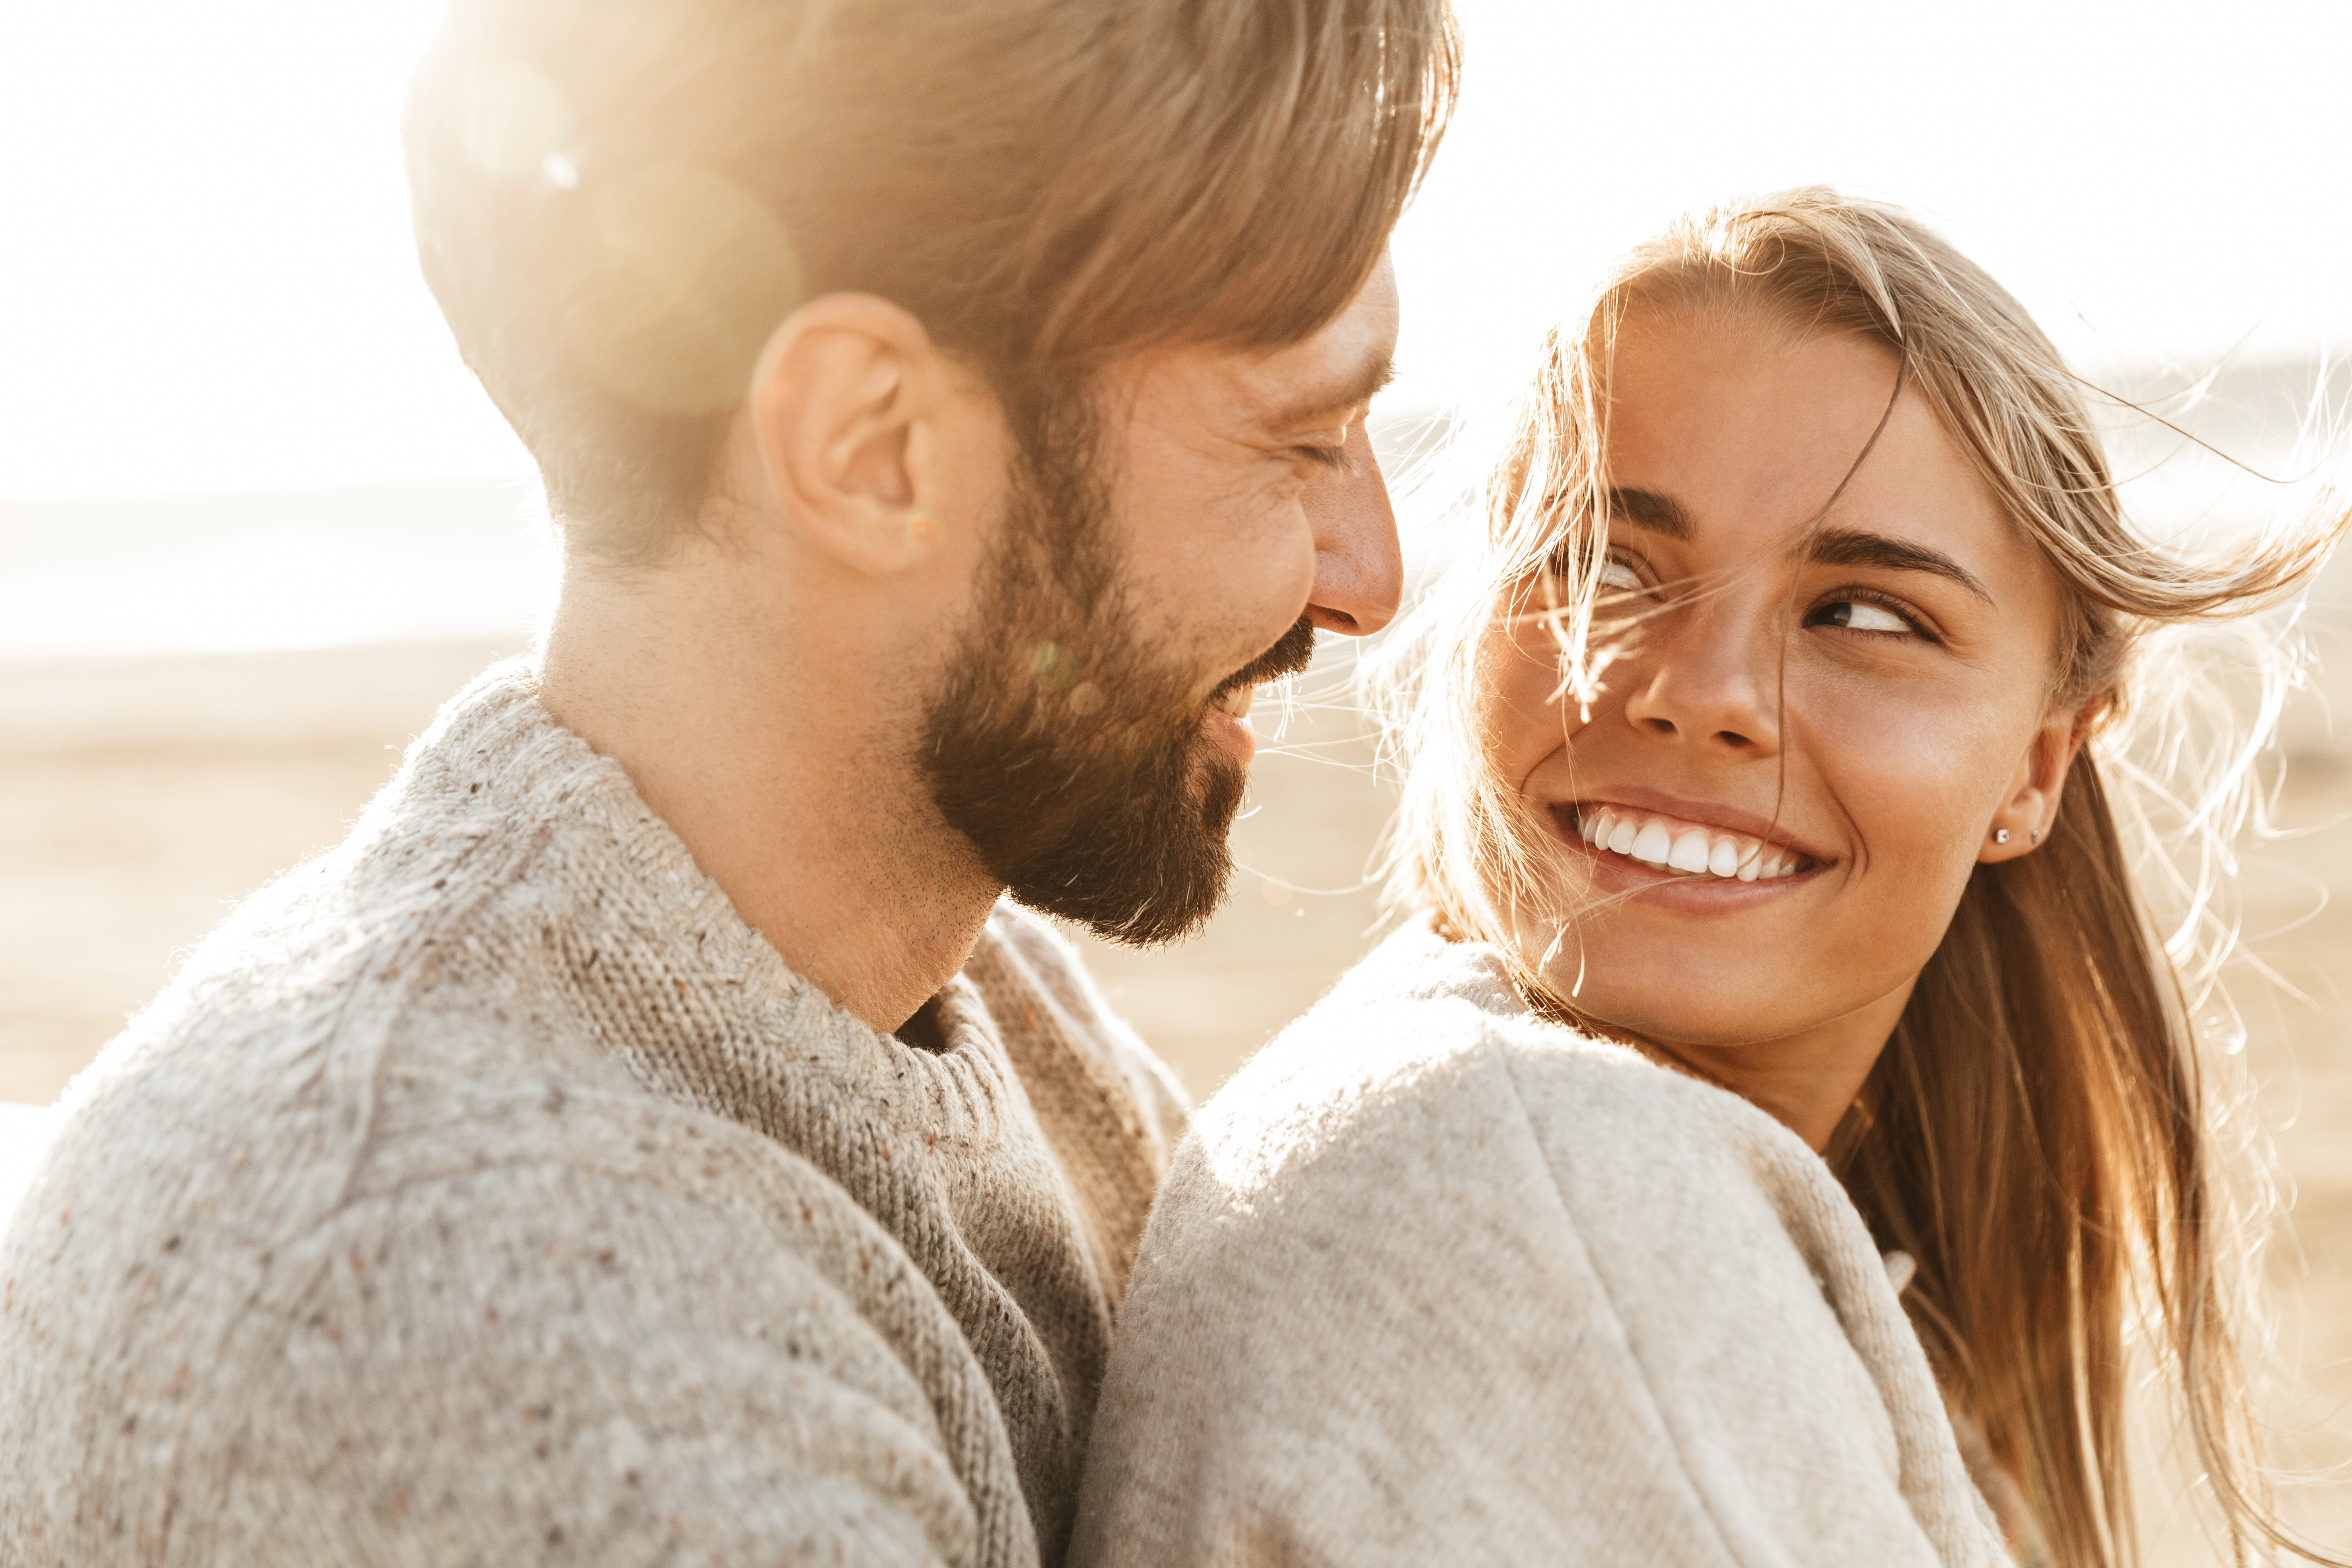 A happy couple | Shutterstock